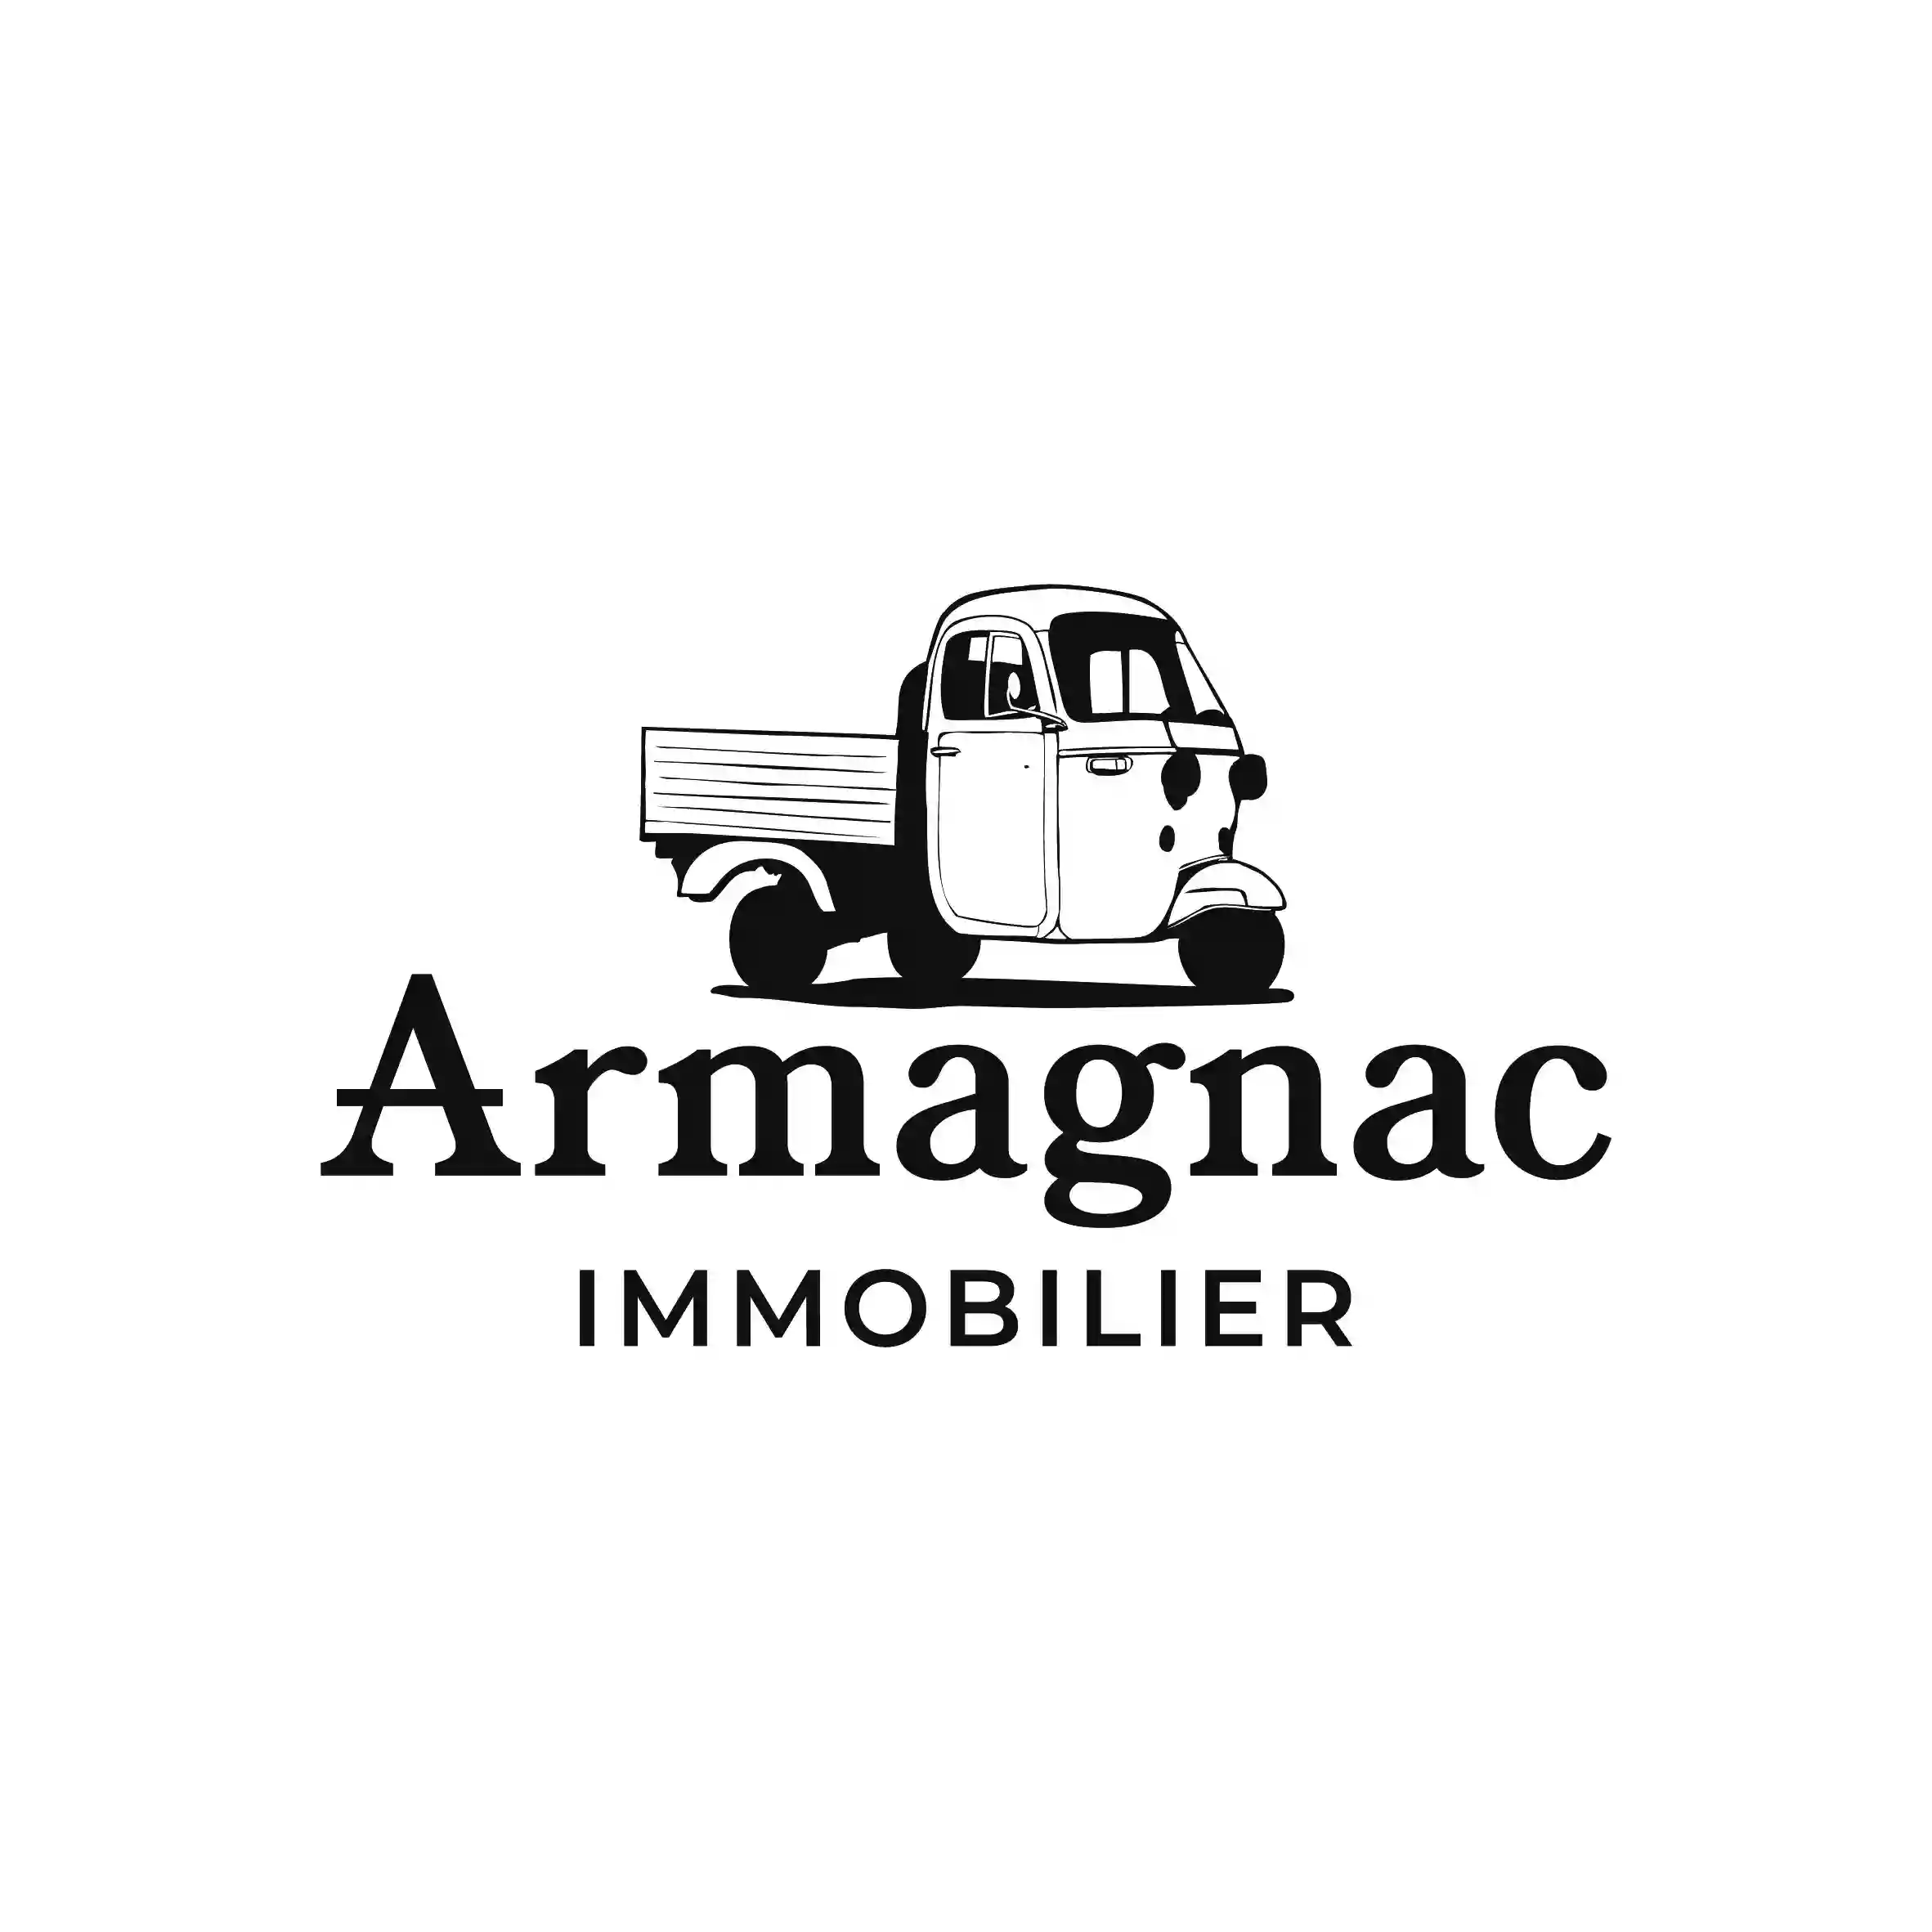 Armagnac Immobilier